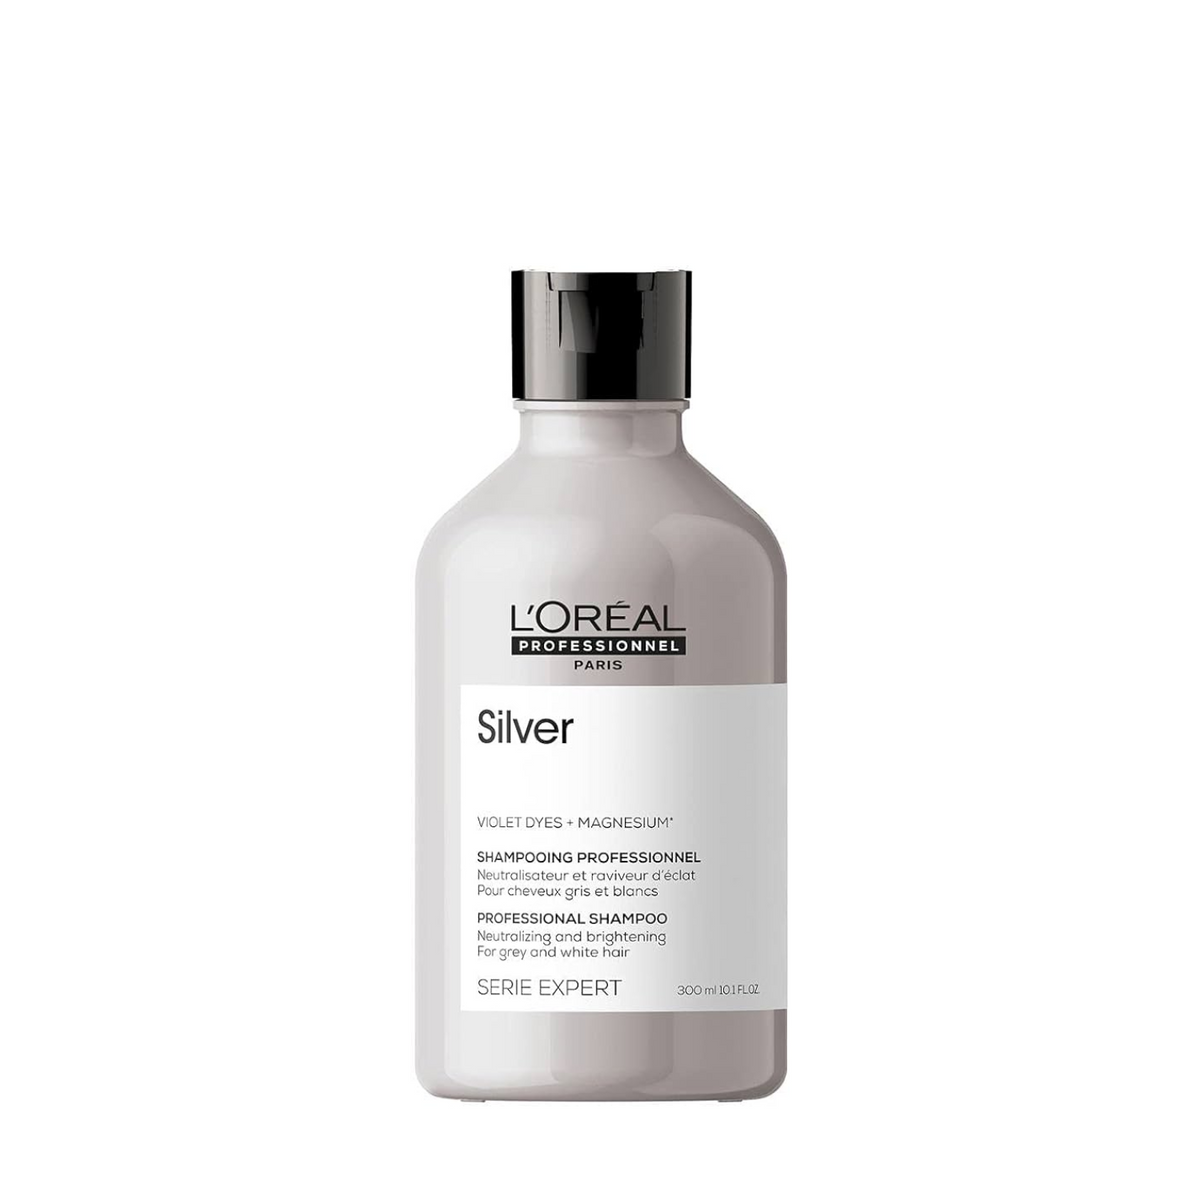 loreal colorista silver szampon